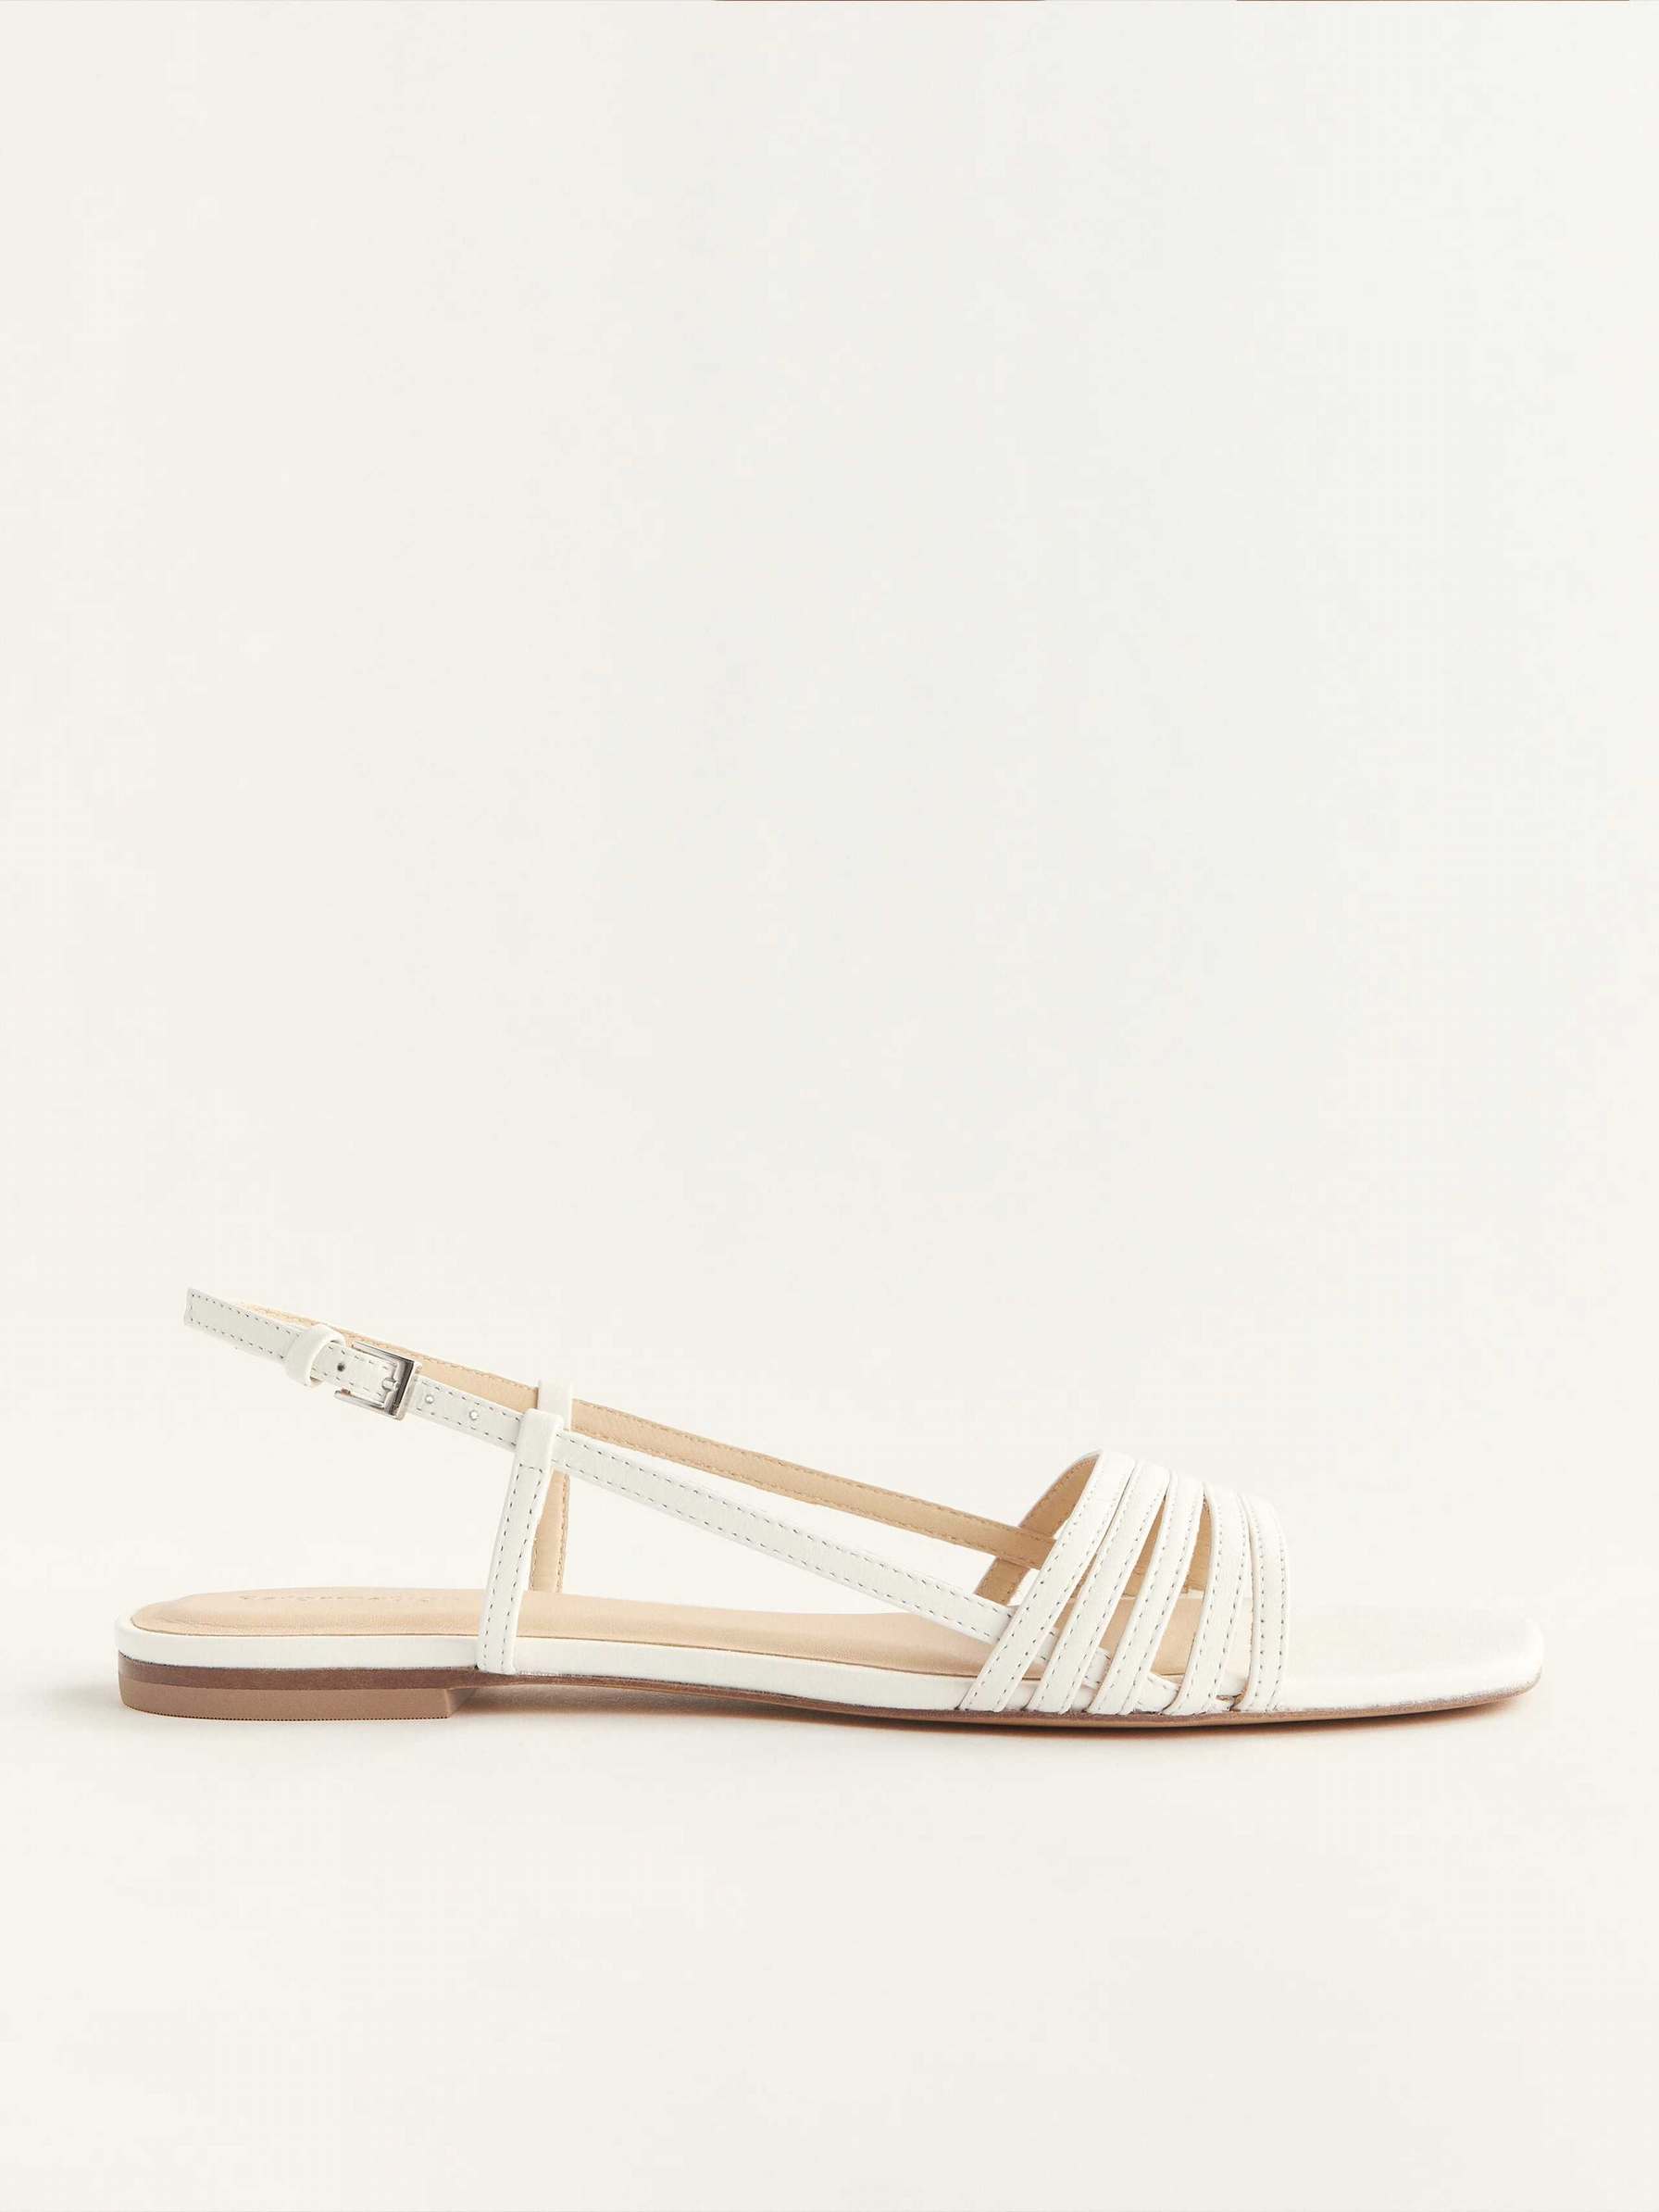 Reformation Millie Lattice Women's Sandals White | OUTLET-531842